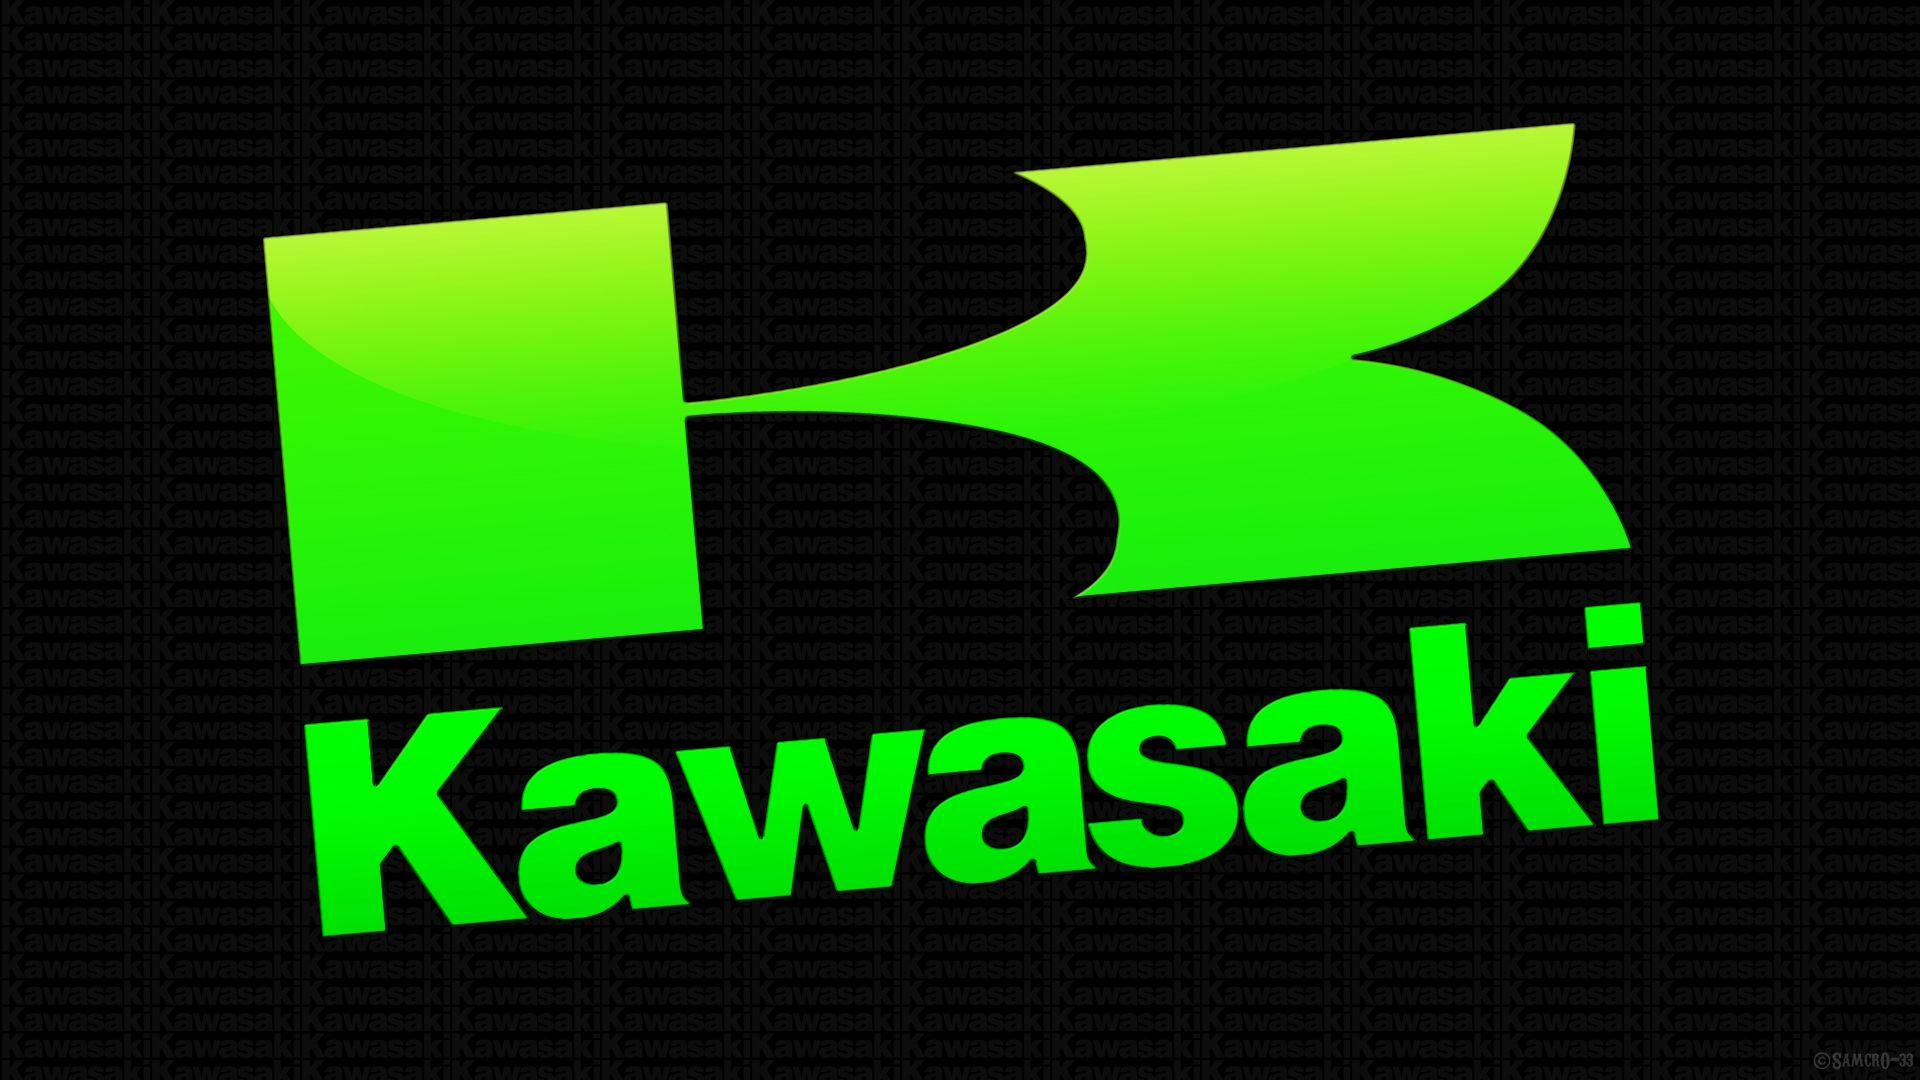 Kawasaki HD Logo Wallpaper. All CAR BIKE LOGO FREE DOWNLOAD